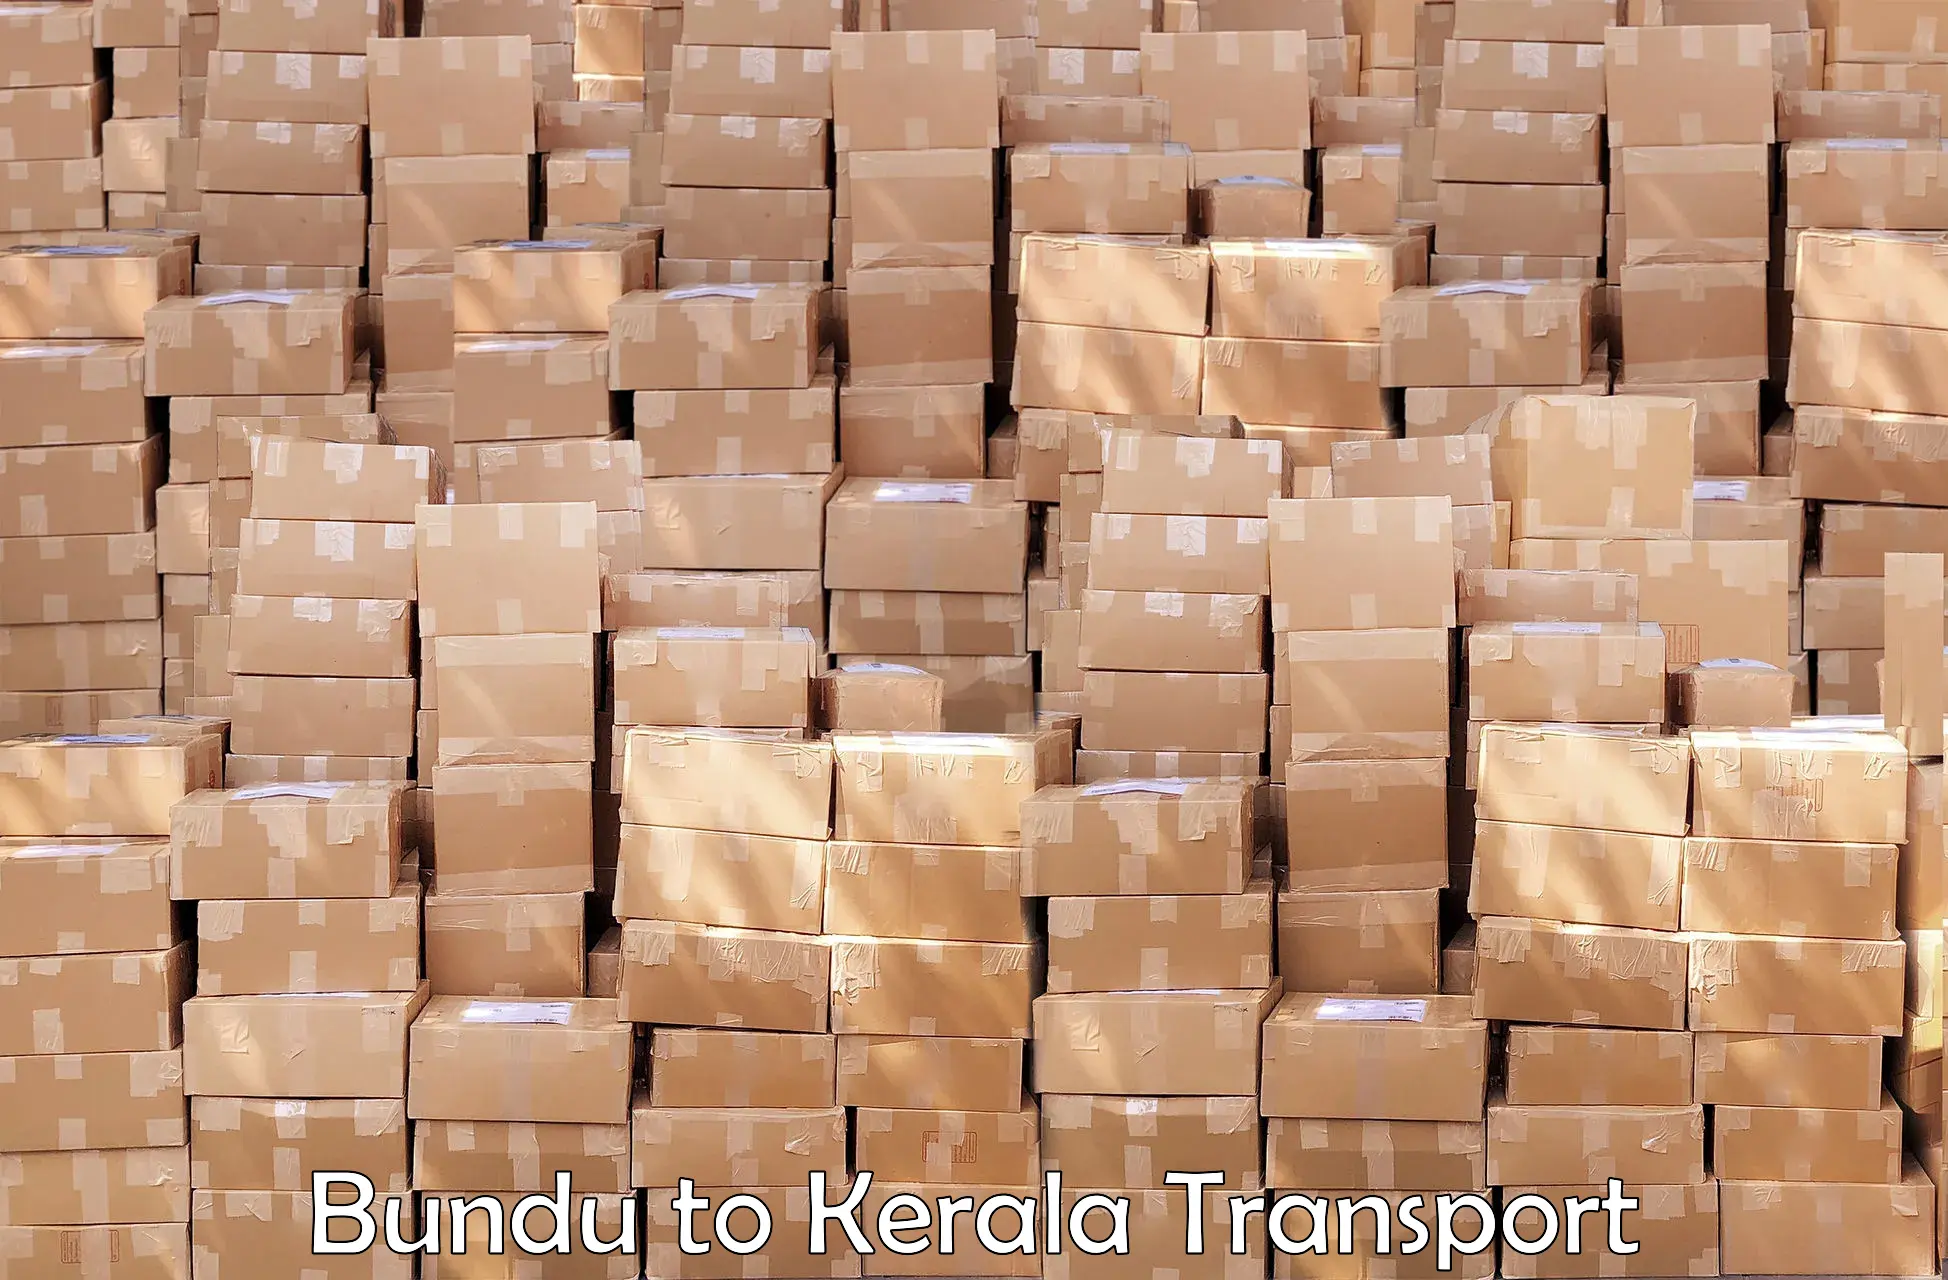 Truck transport companies in India Bundu to Manjeri